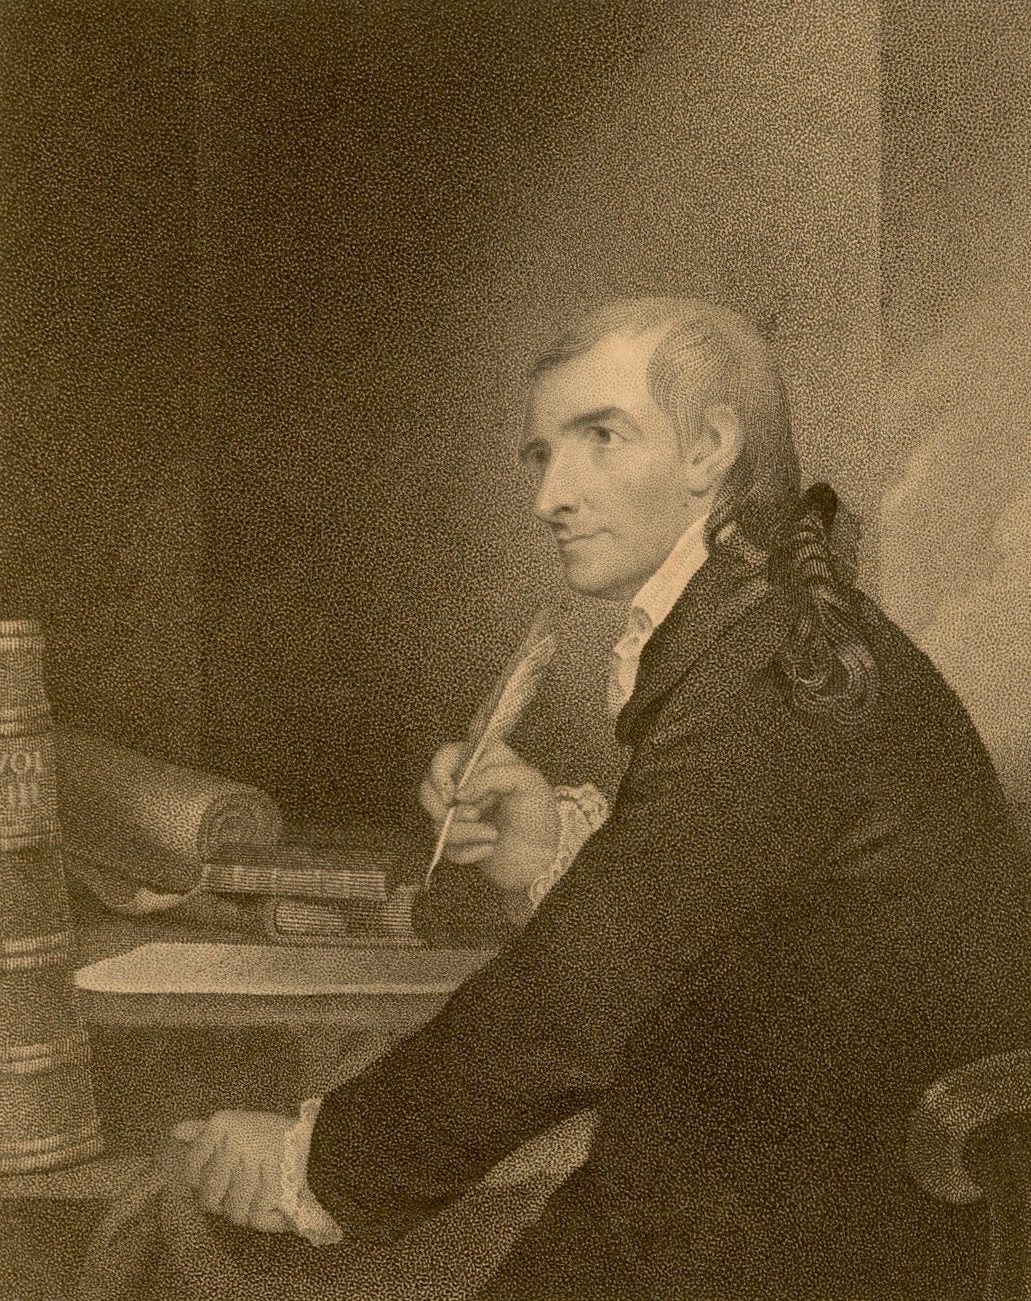 Francis Hopkinson, c. 1780